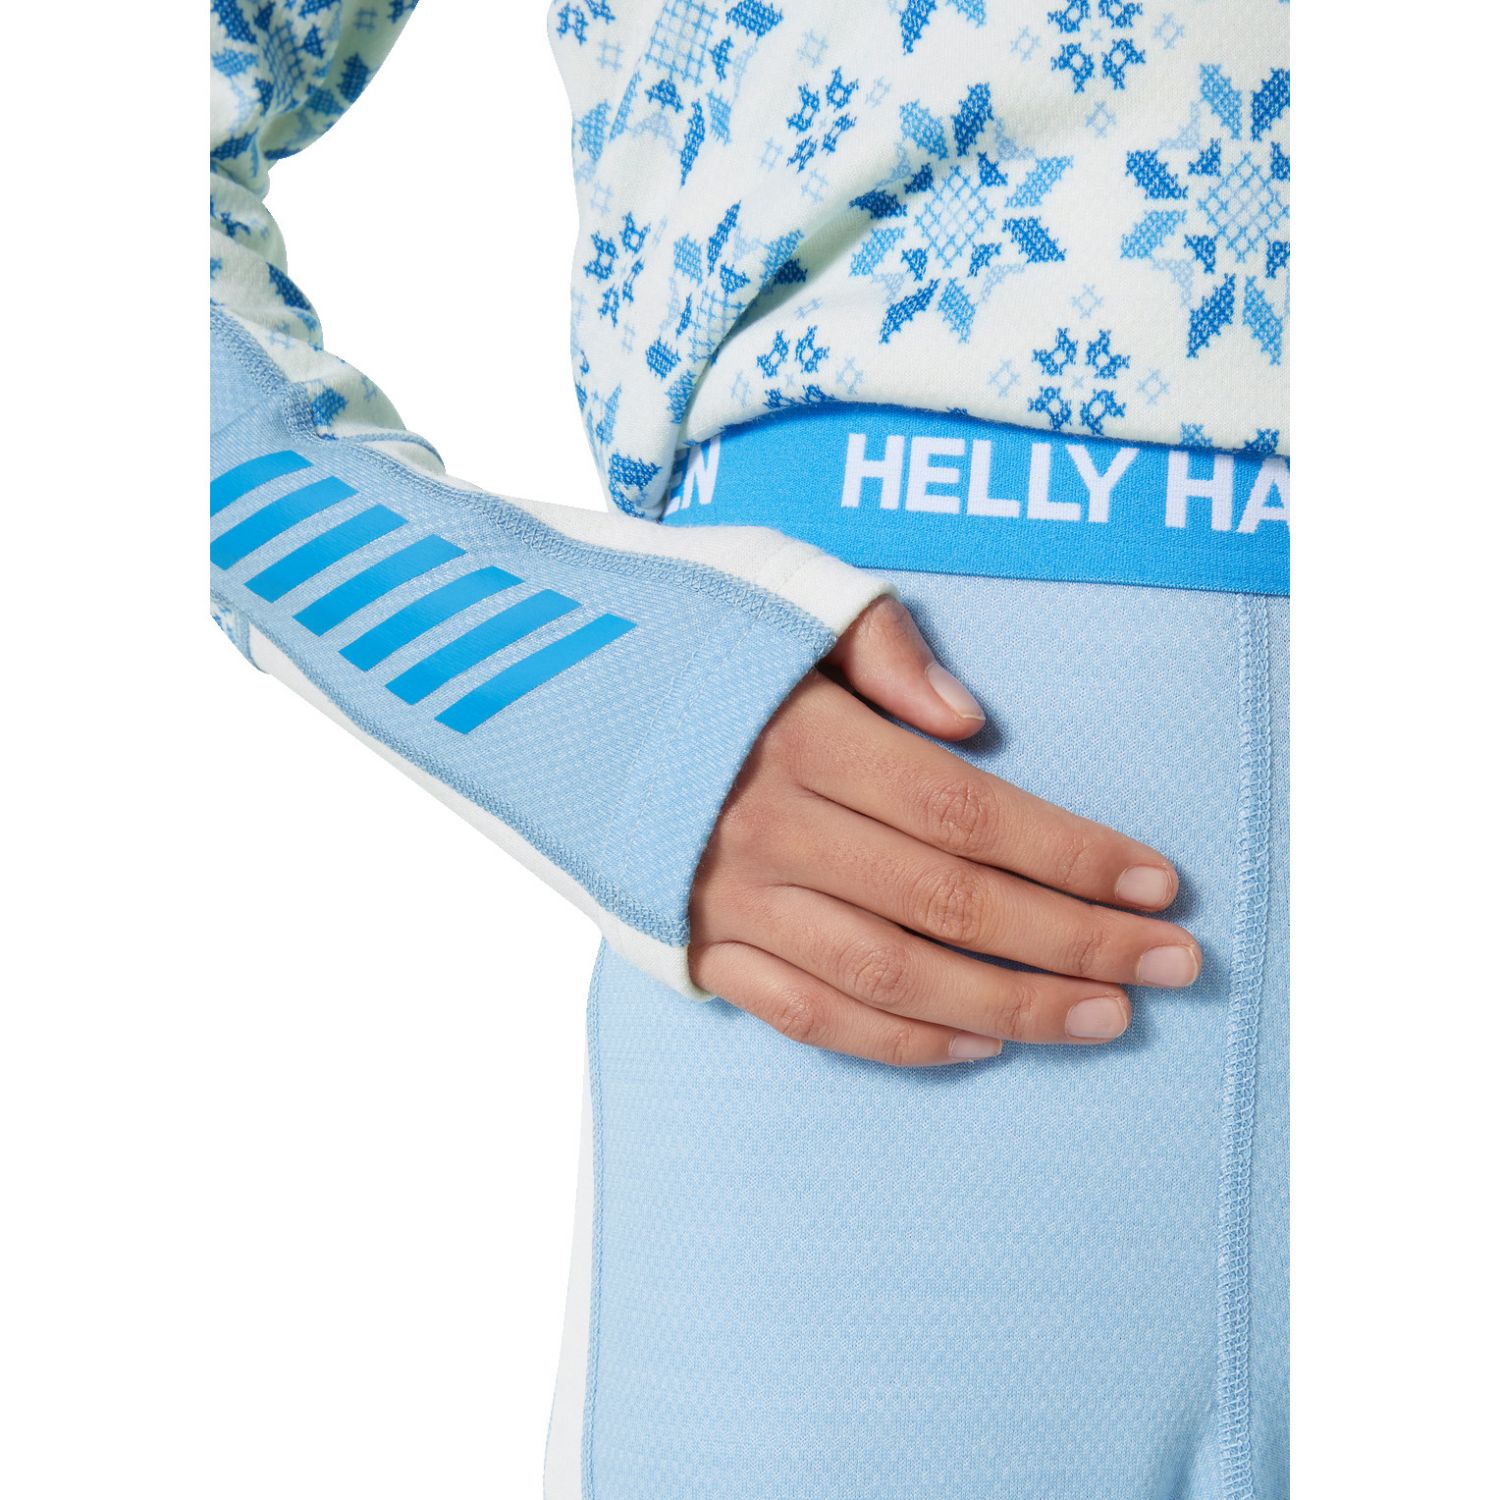 Helly Hansen Graphic Lifa Merino, set, junior, bright blue